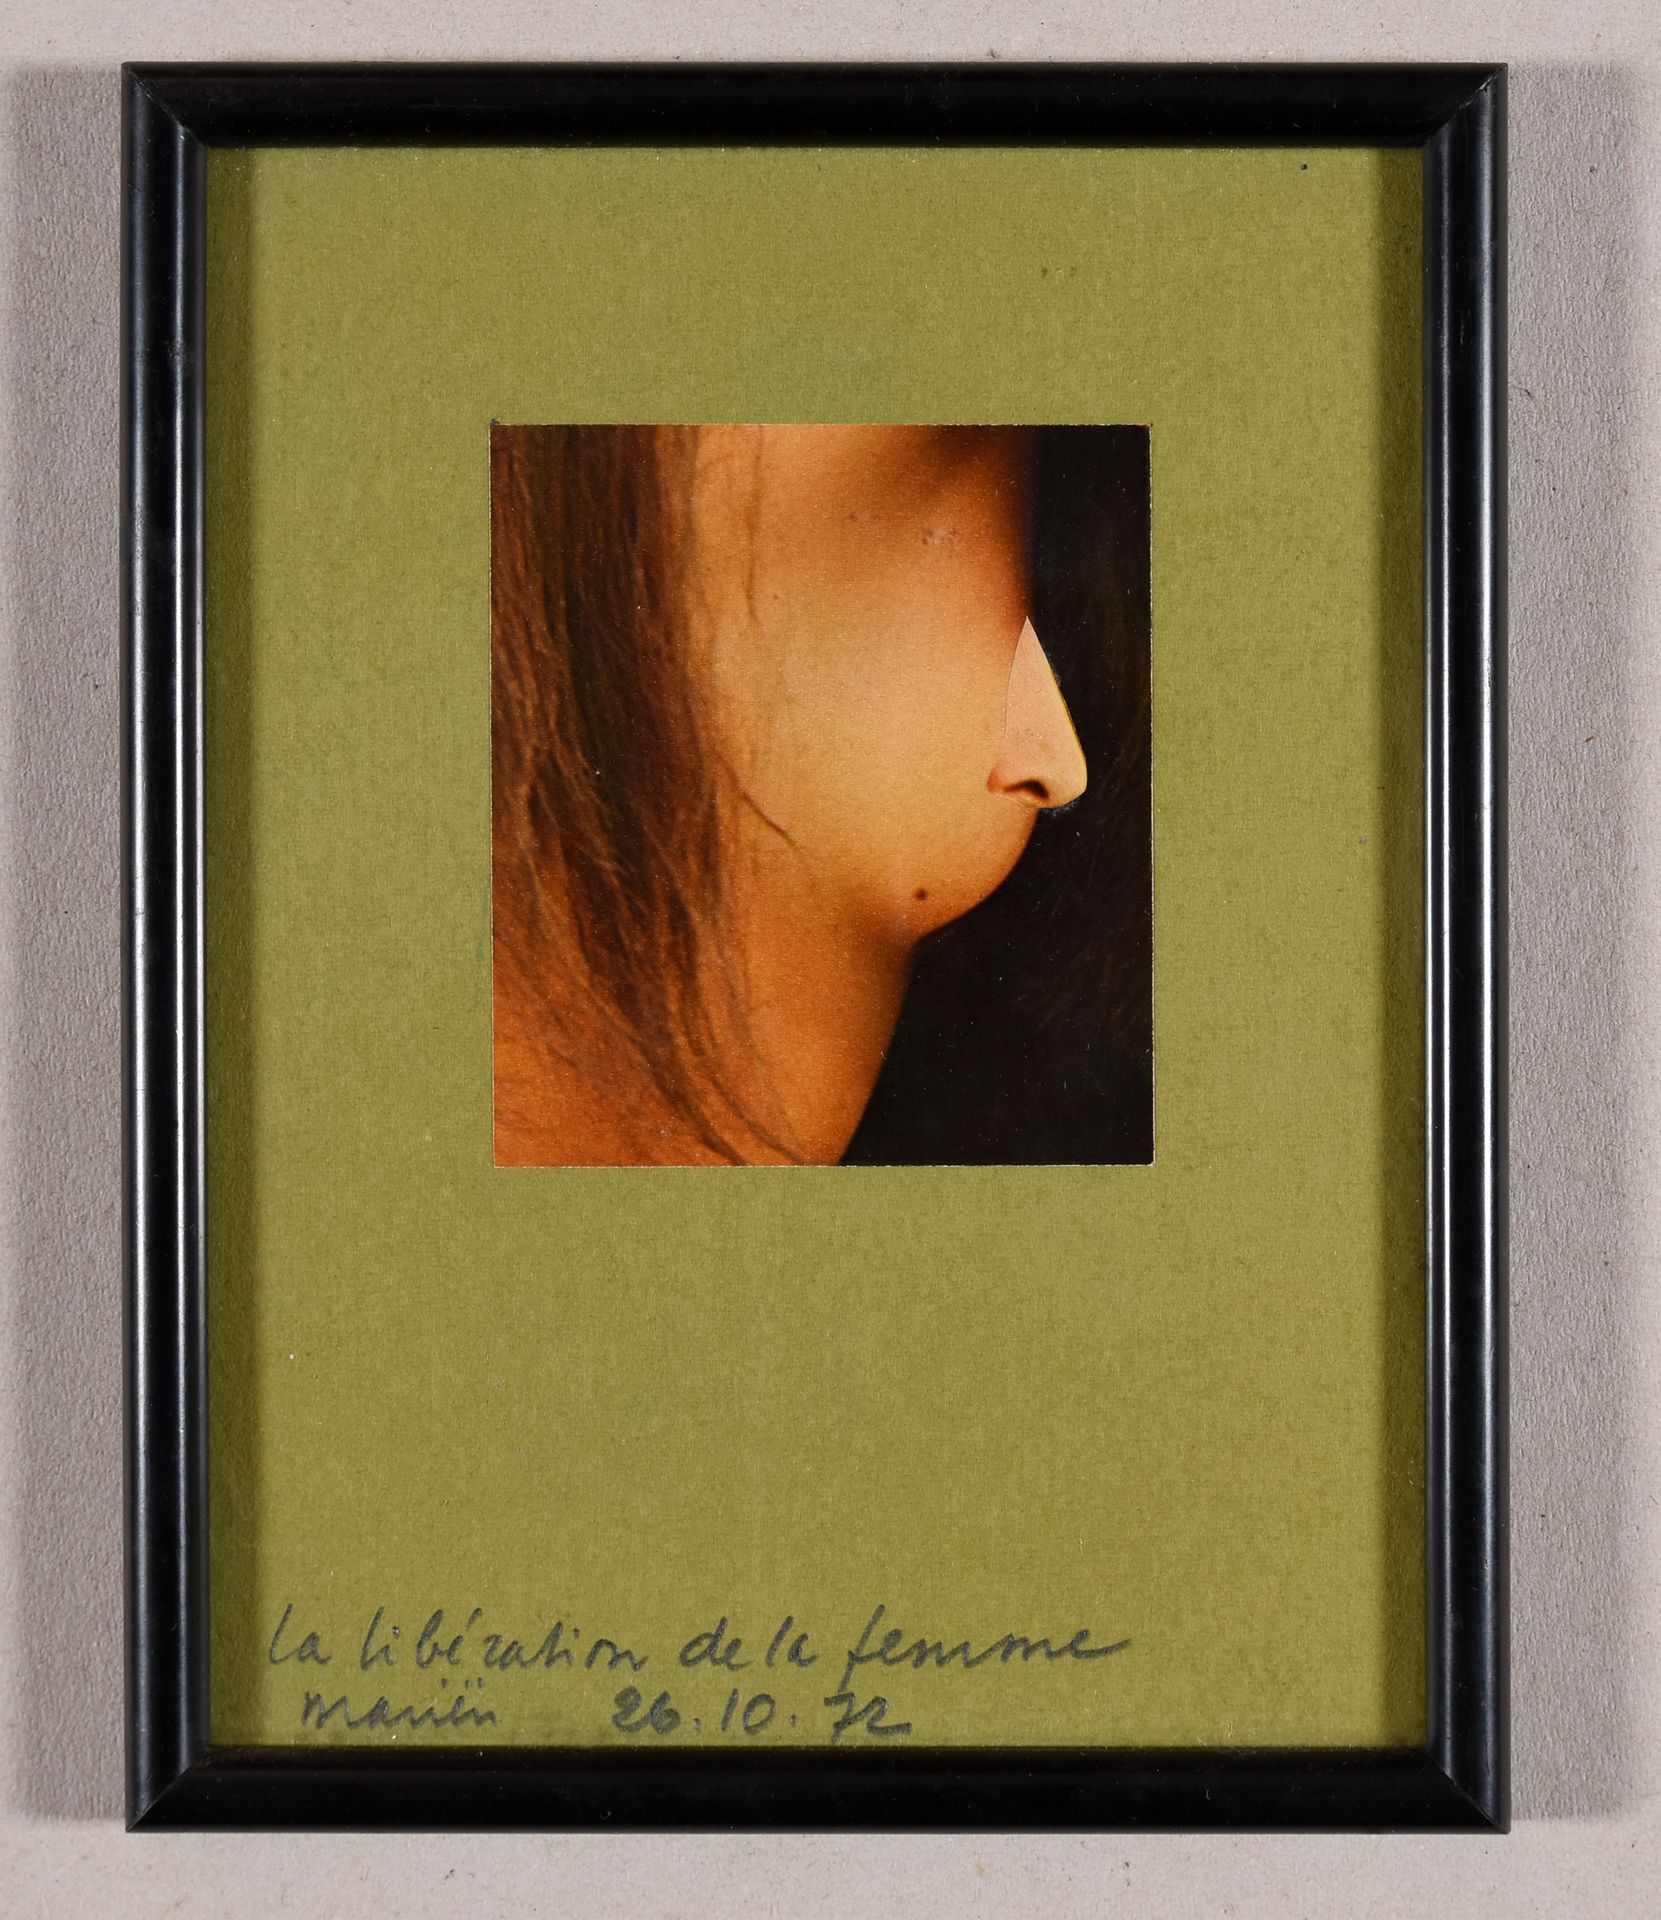 Mariën, Marcel MARIËN, Marcel La libération de la femme. 1972 原始照片和拼贴画，8,4 x 7,5&hellip;